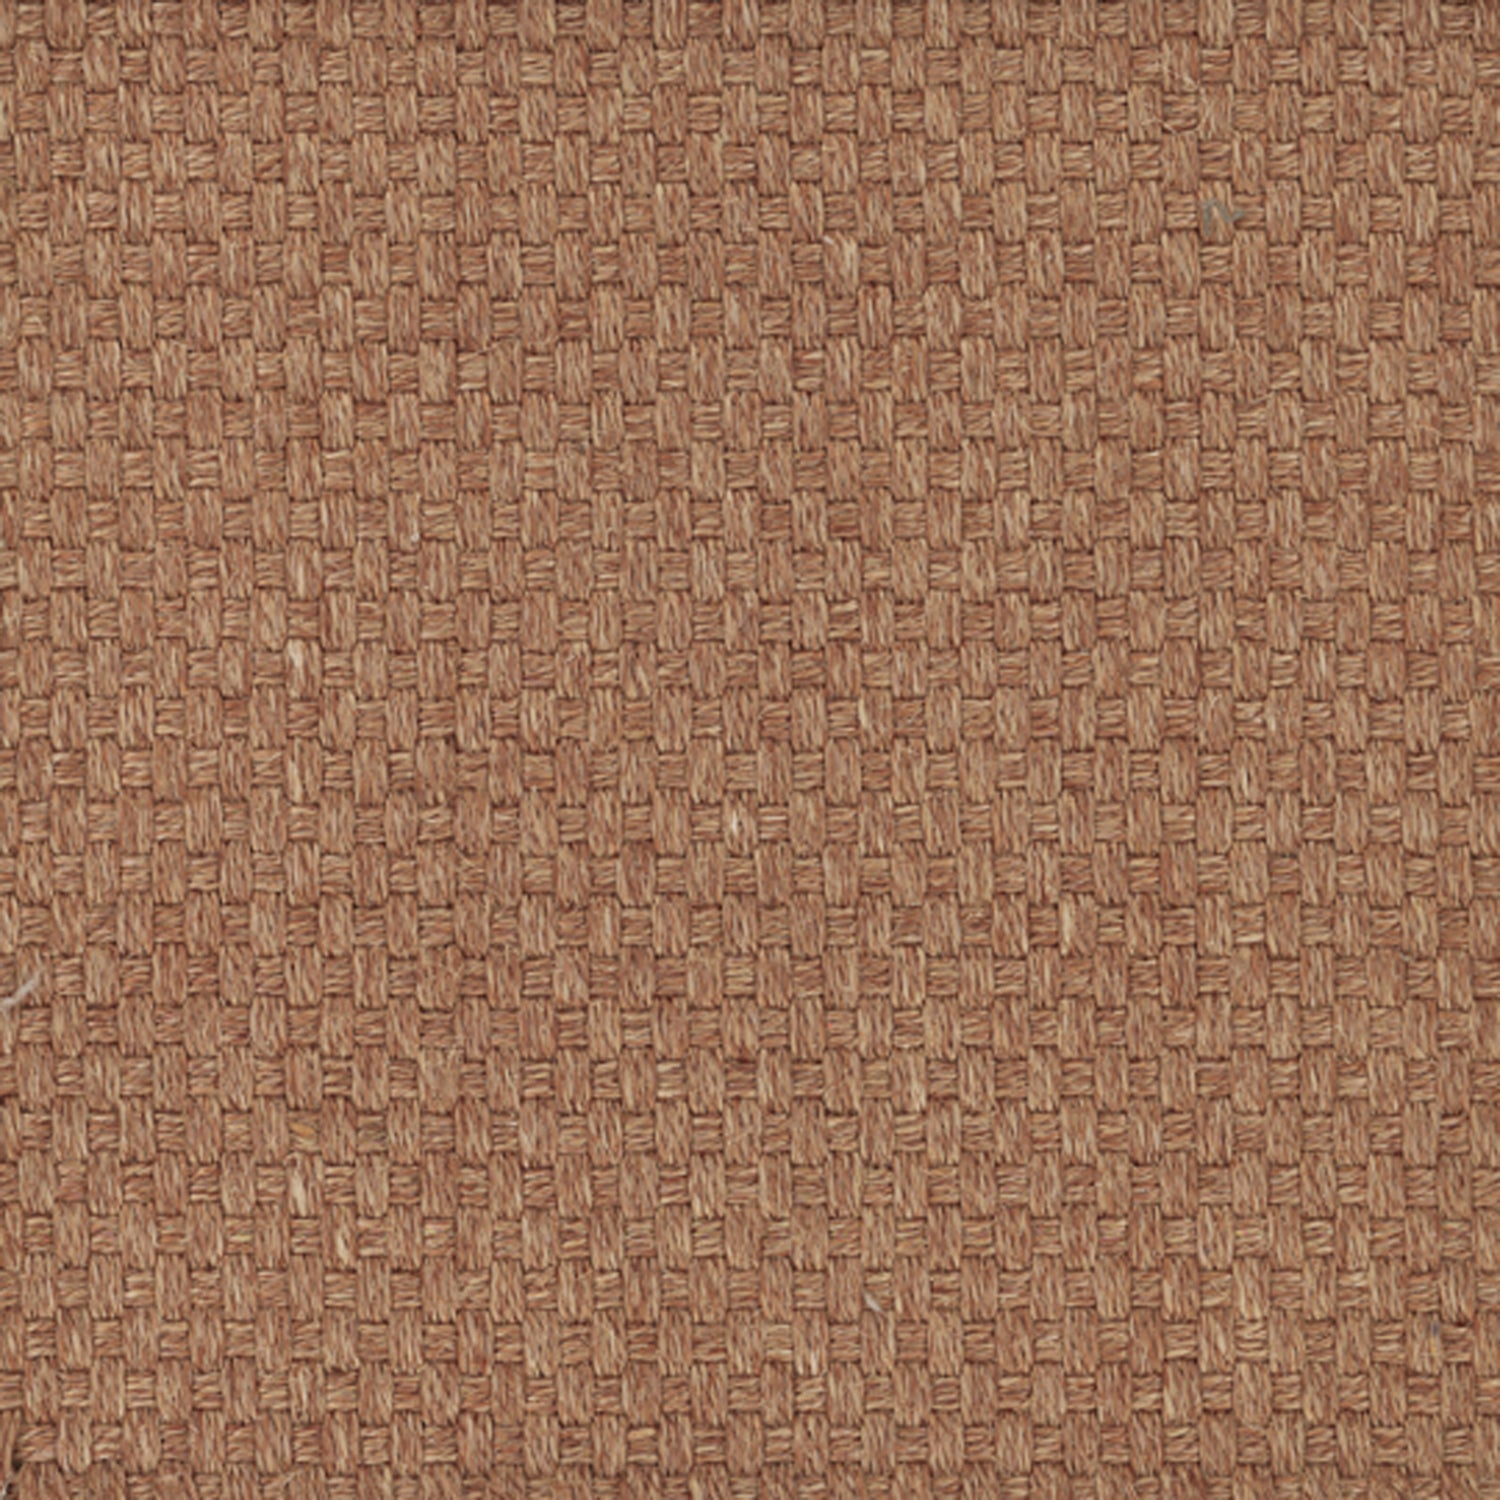 Sisal broadloom carpet swatch in a large-scale grid weave in bronze.